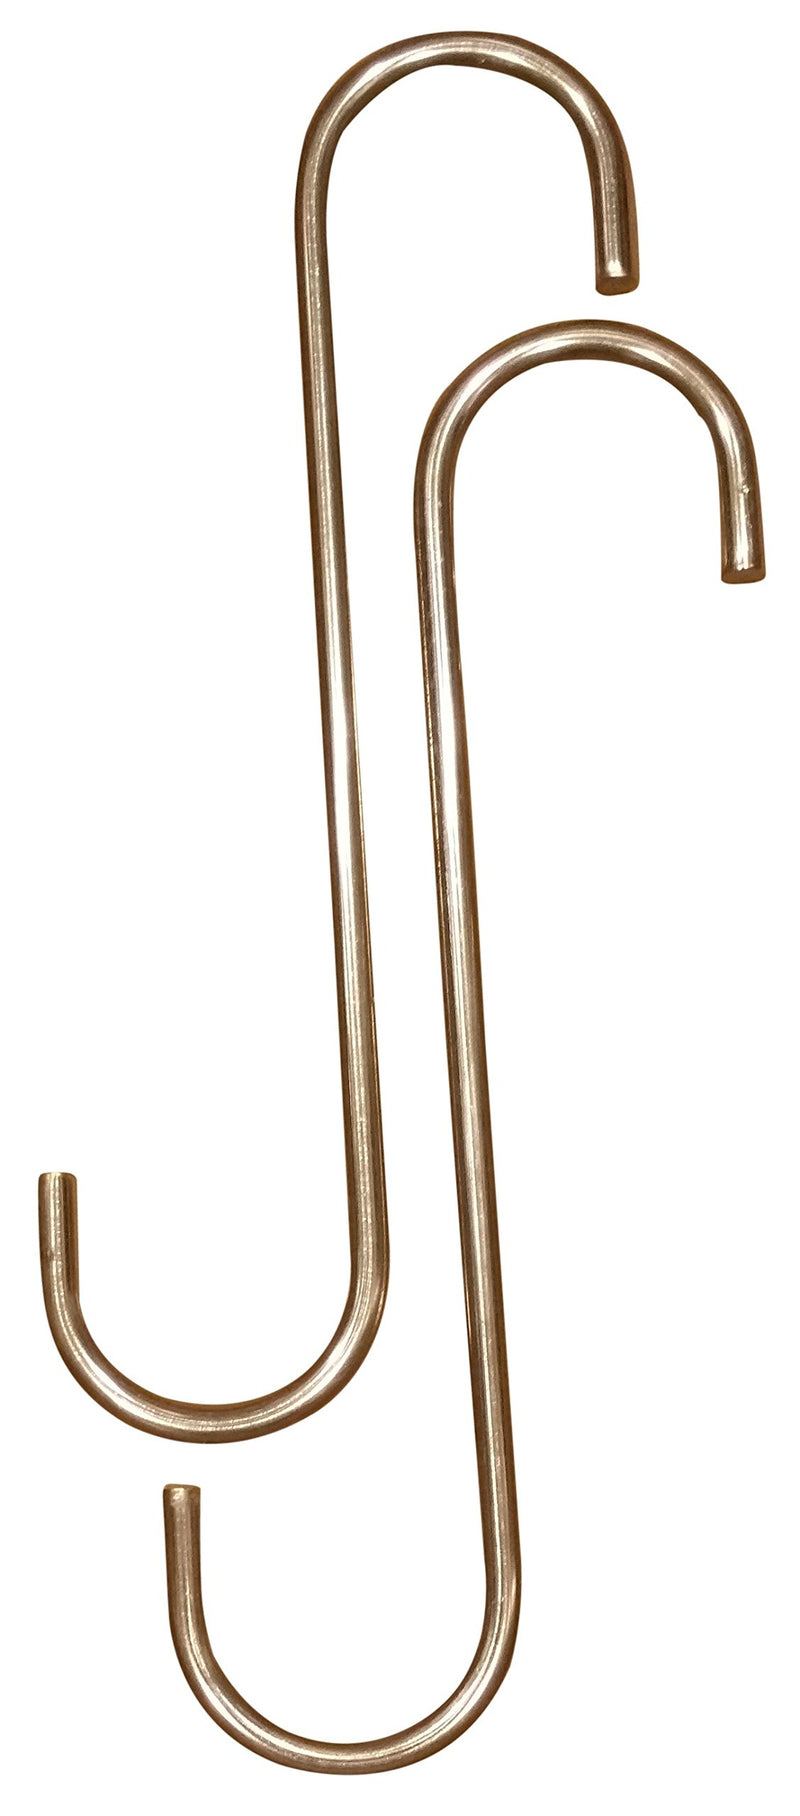  [AUSTRALIA] - JQuad -Stainless Steel- Brake Caliper Hanger Hook (2 Piece Set) -Made in The USA-